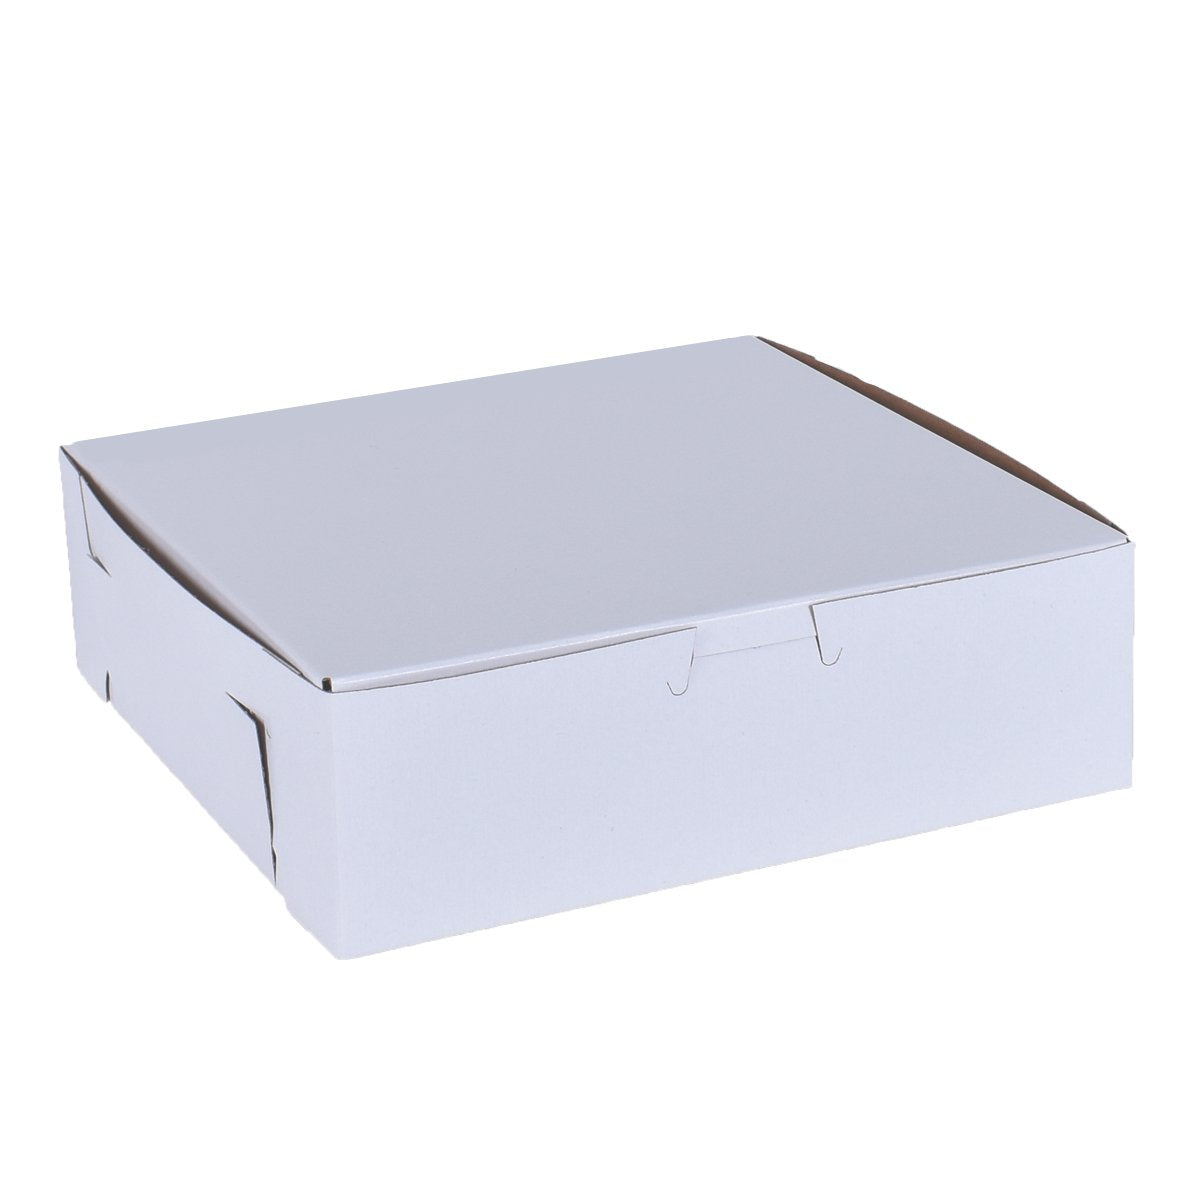 White Cake Boxes - 6.25x3.75x2.5 Bake Supply Plus Box - Bake Supply Plus